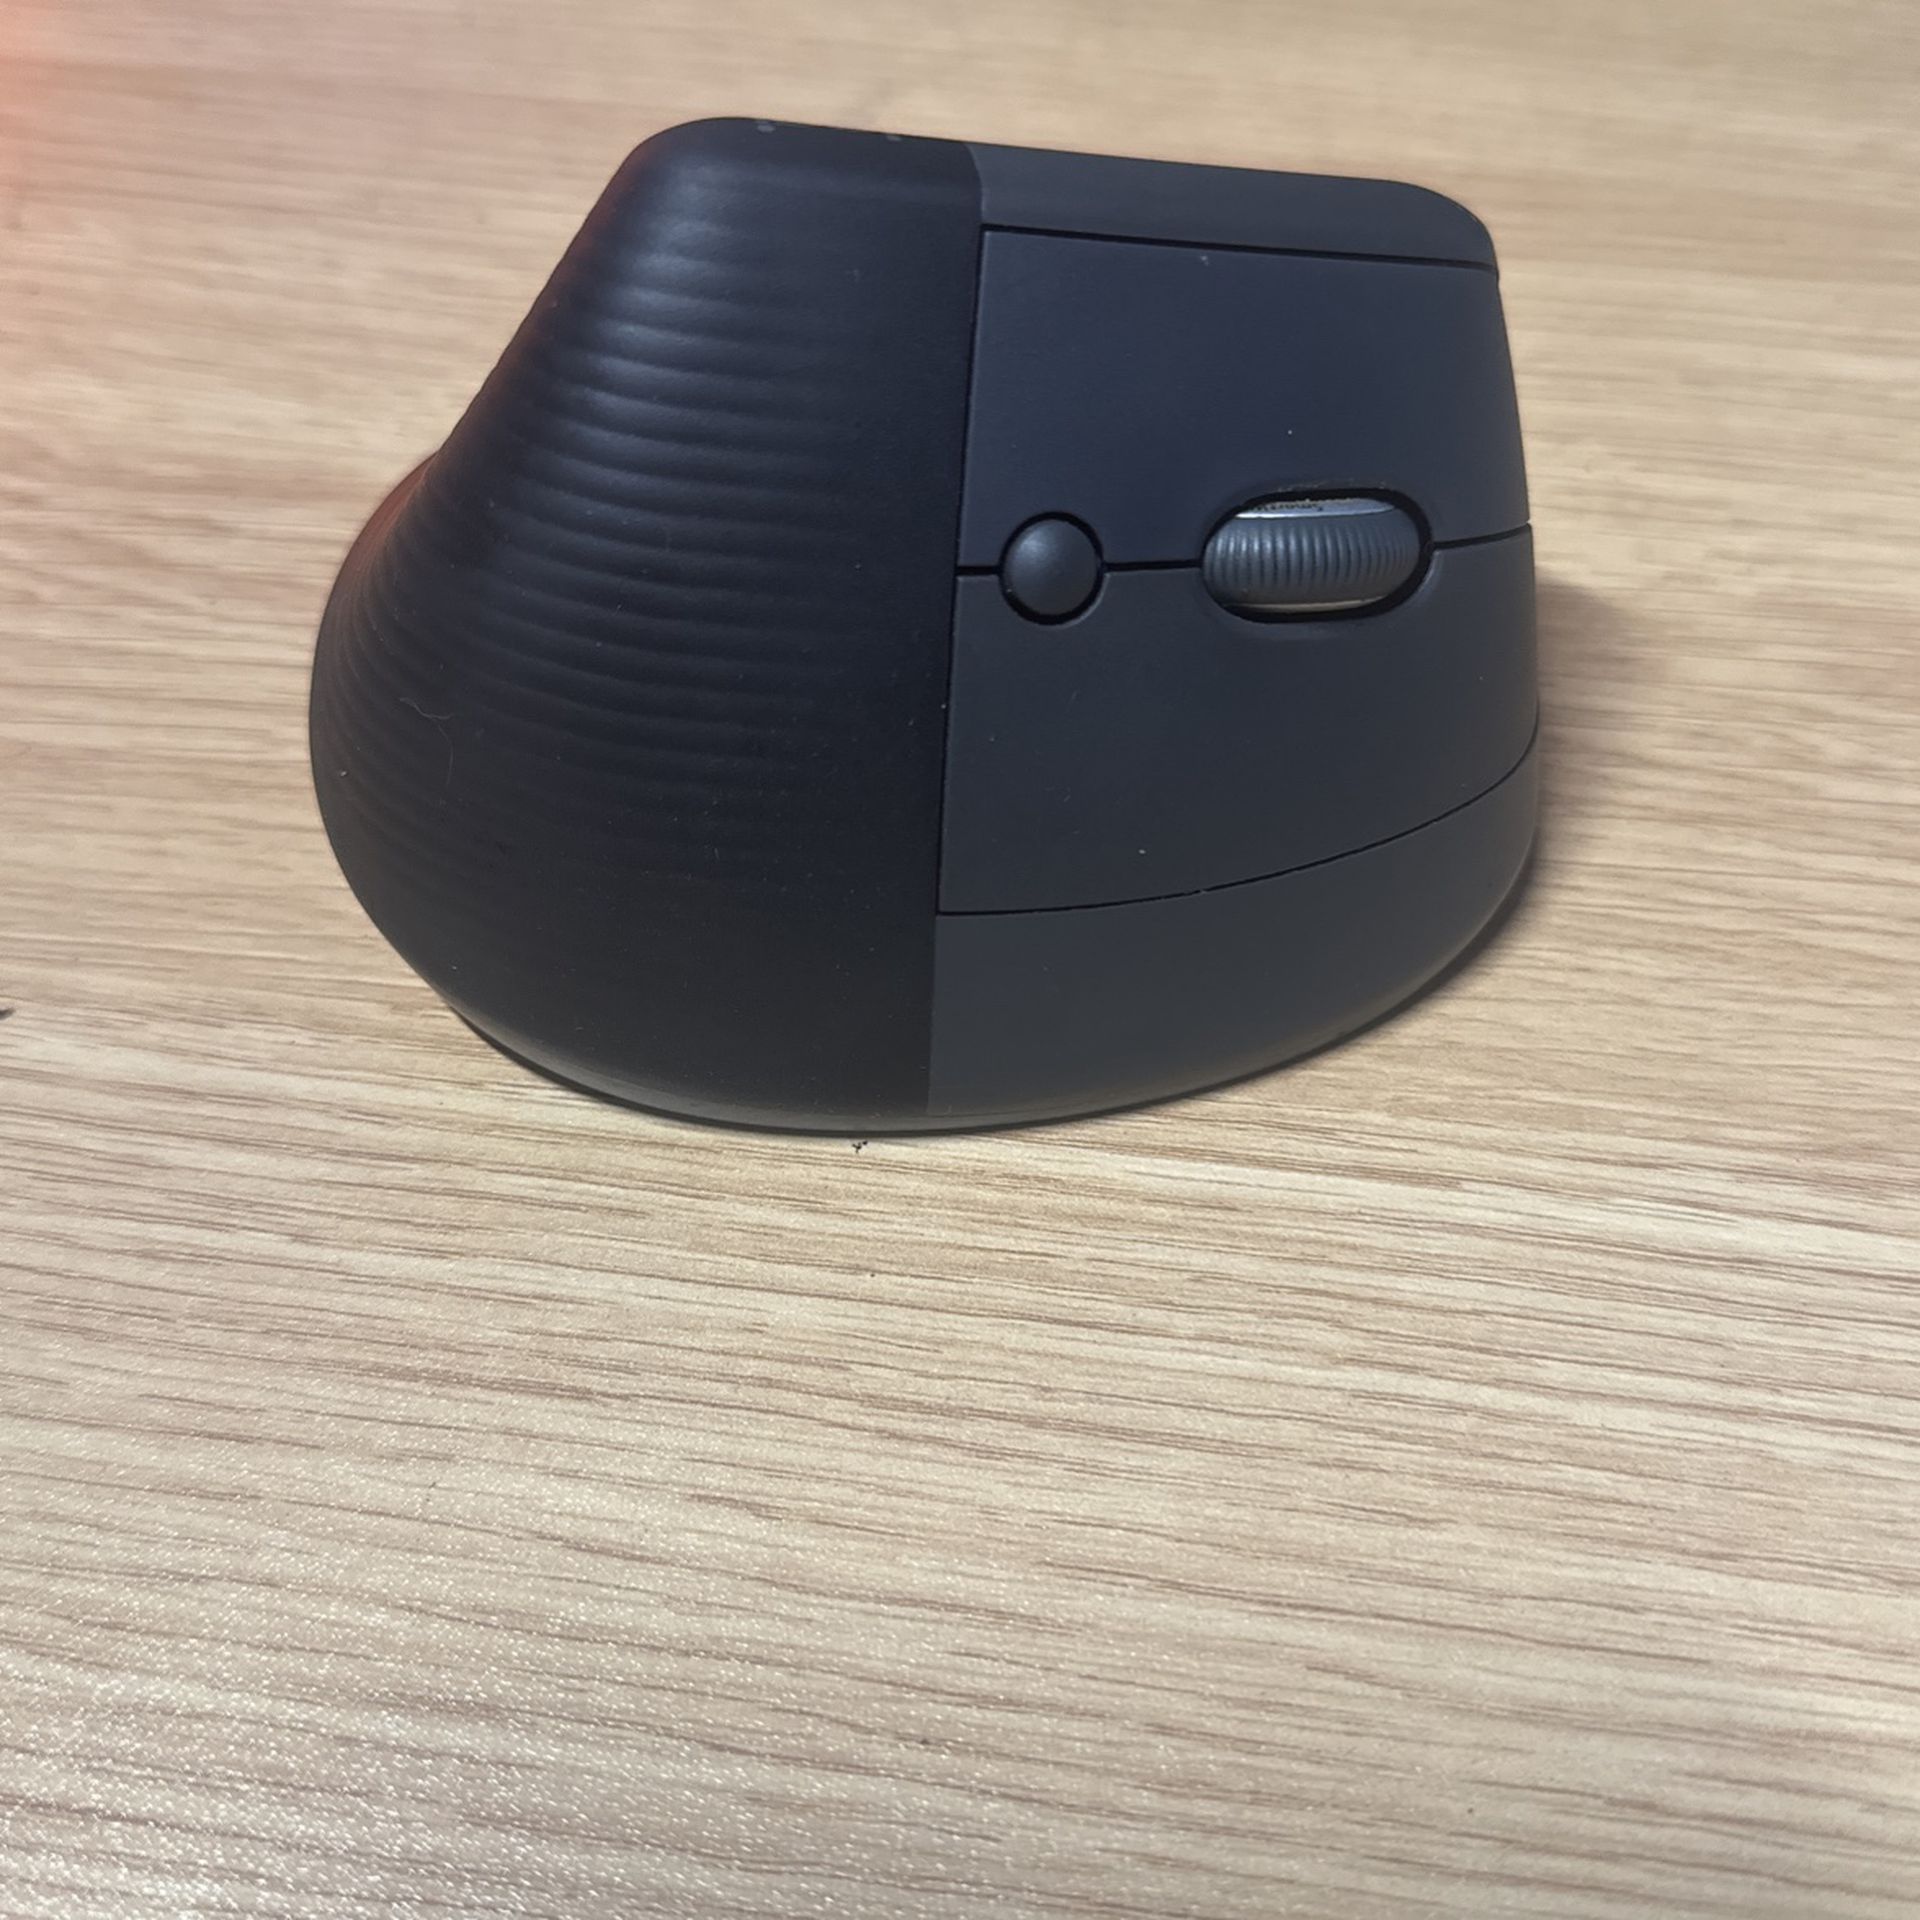 Logitech Ergonomic Bluetooth Mouse